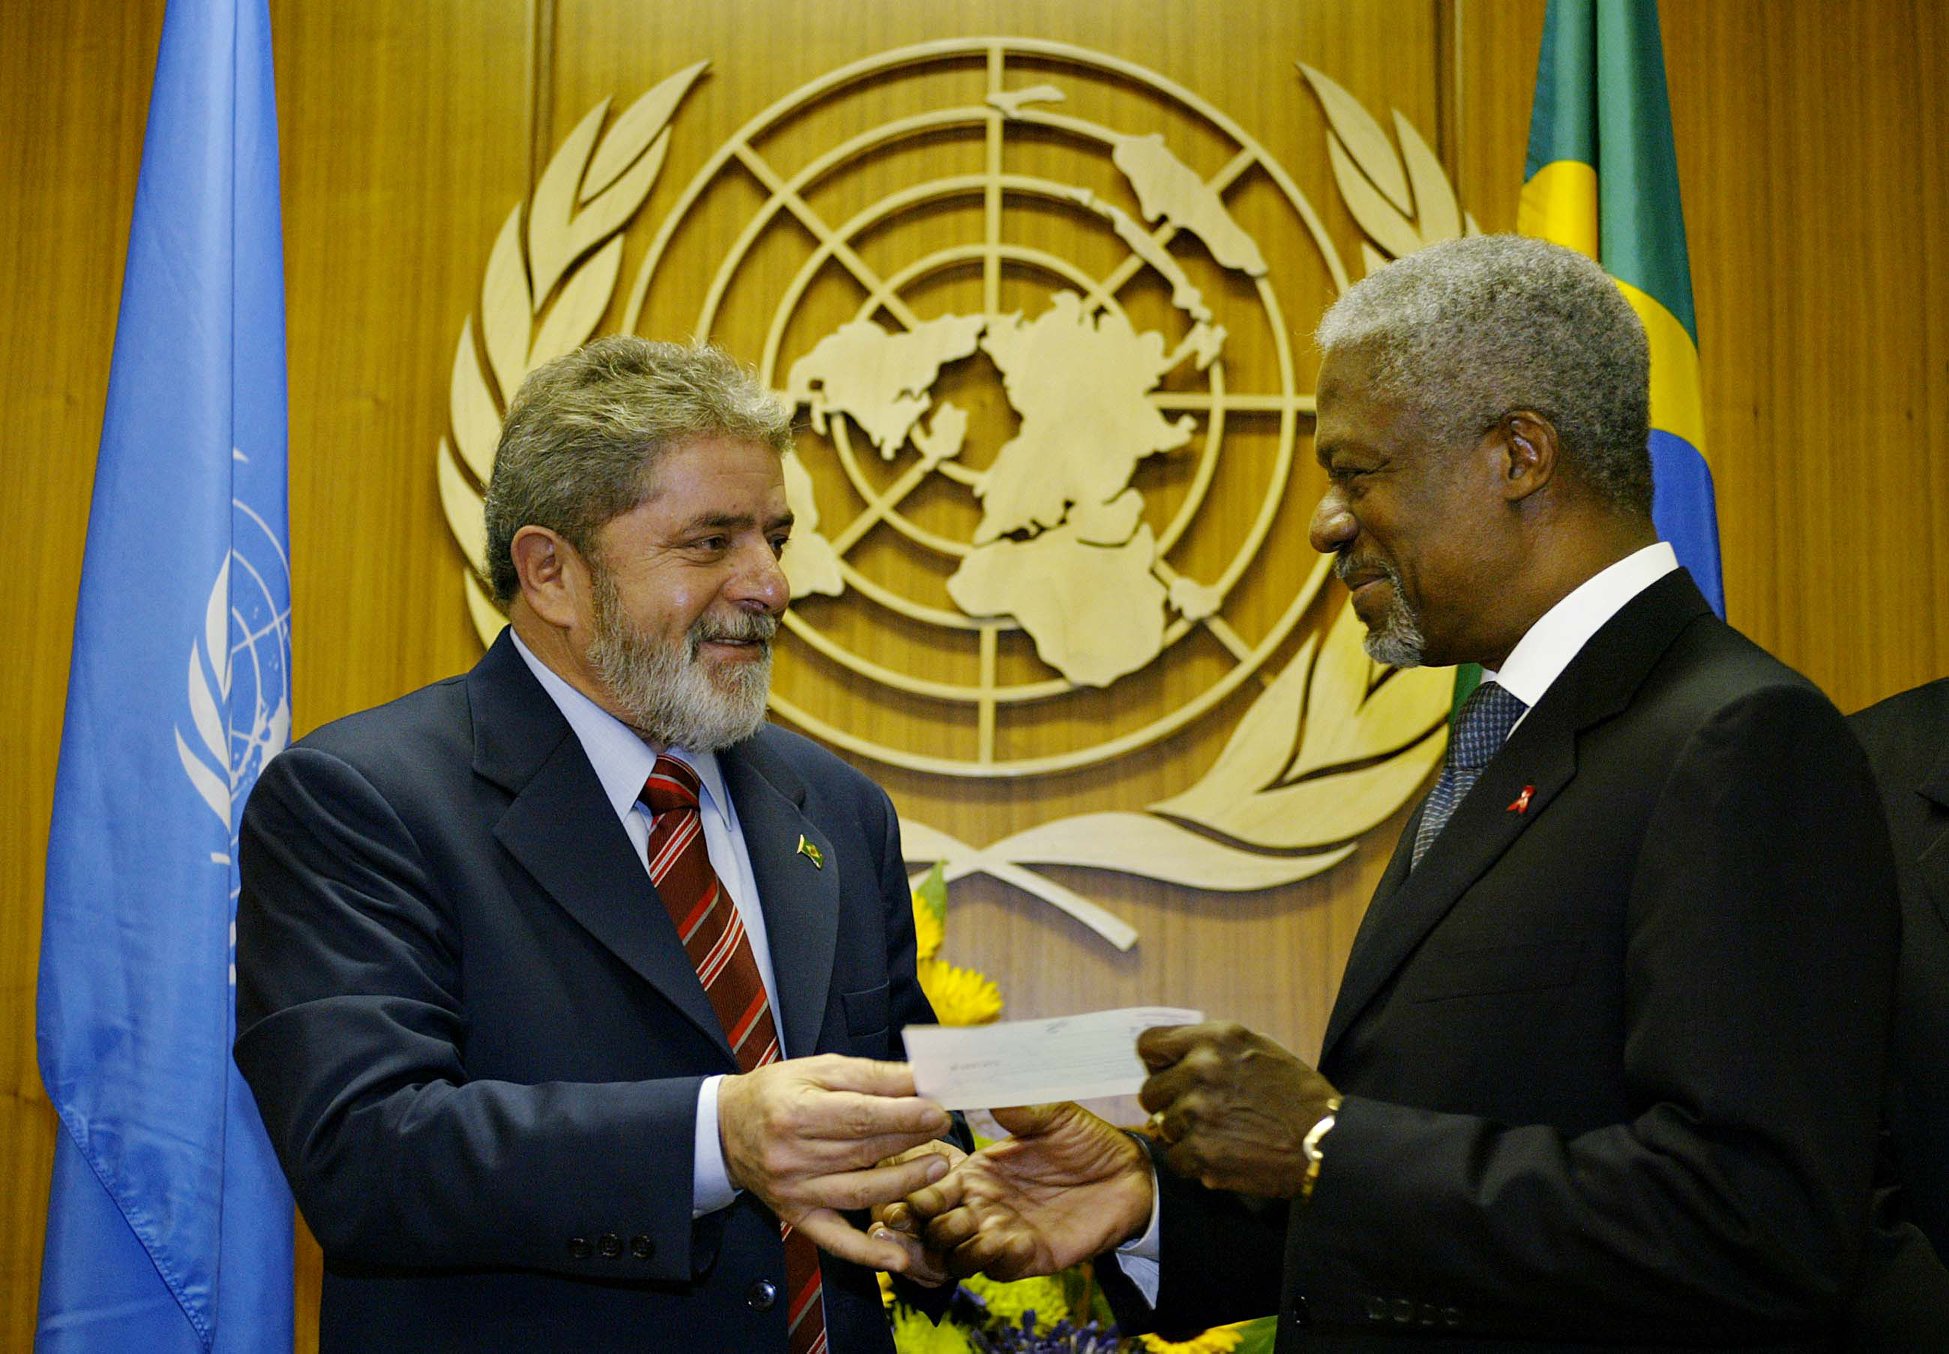 Lula entregou a Kofi Annan cheque para combate à fome